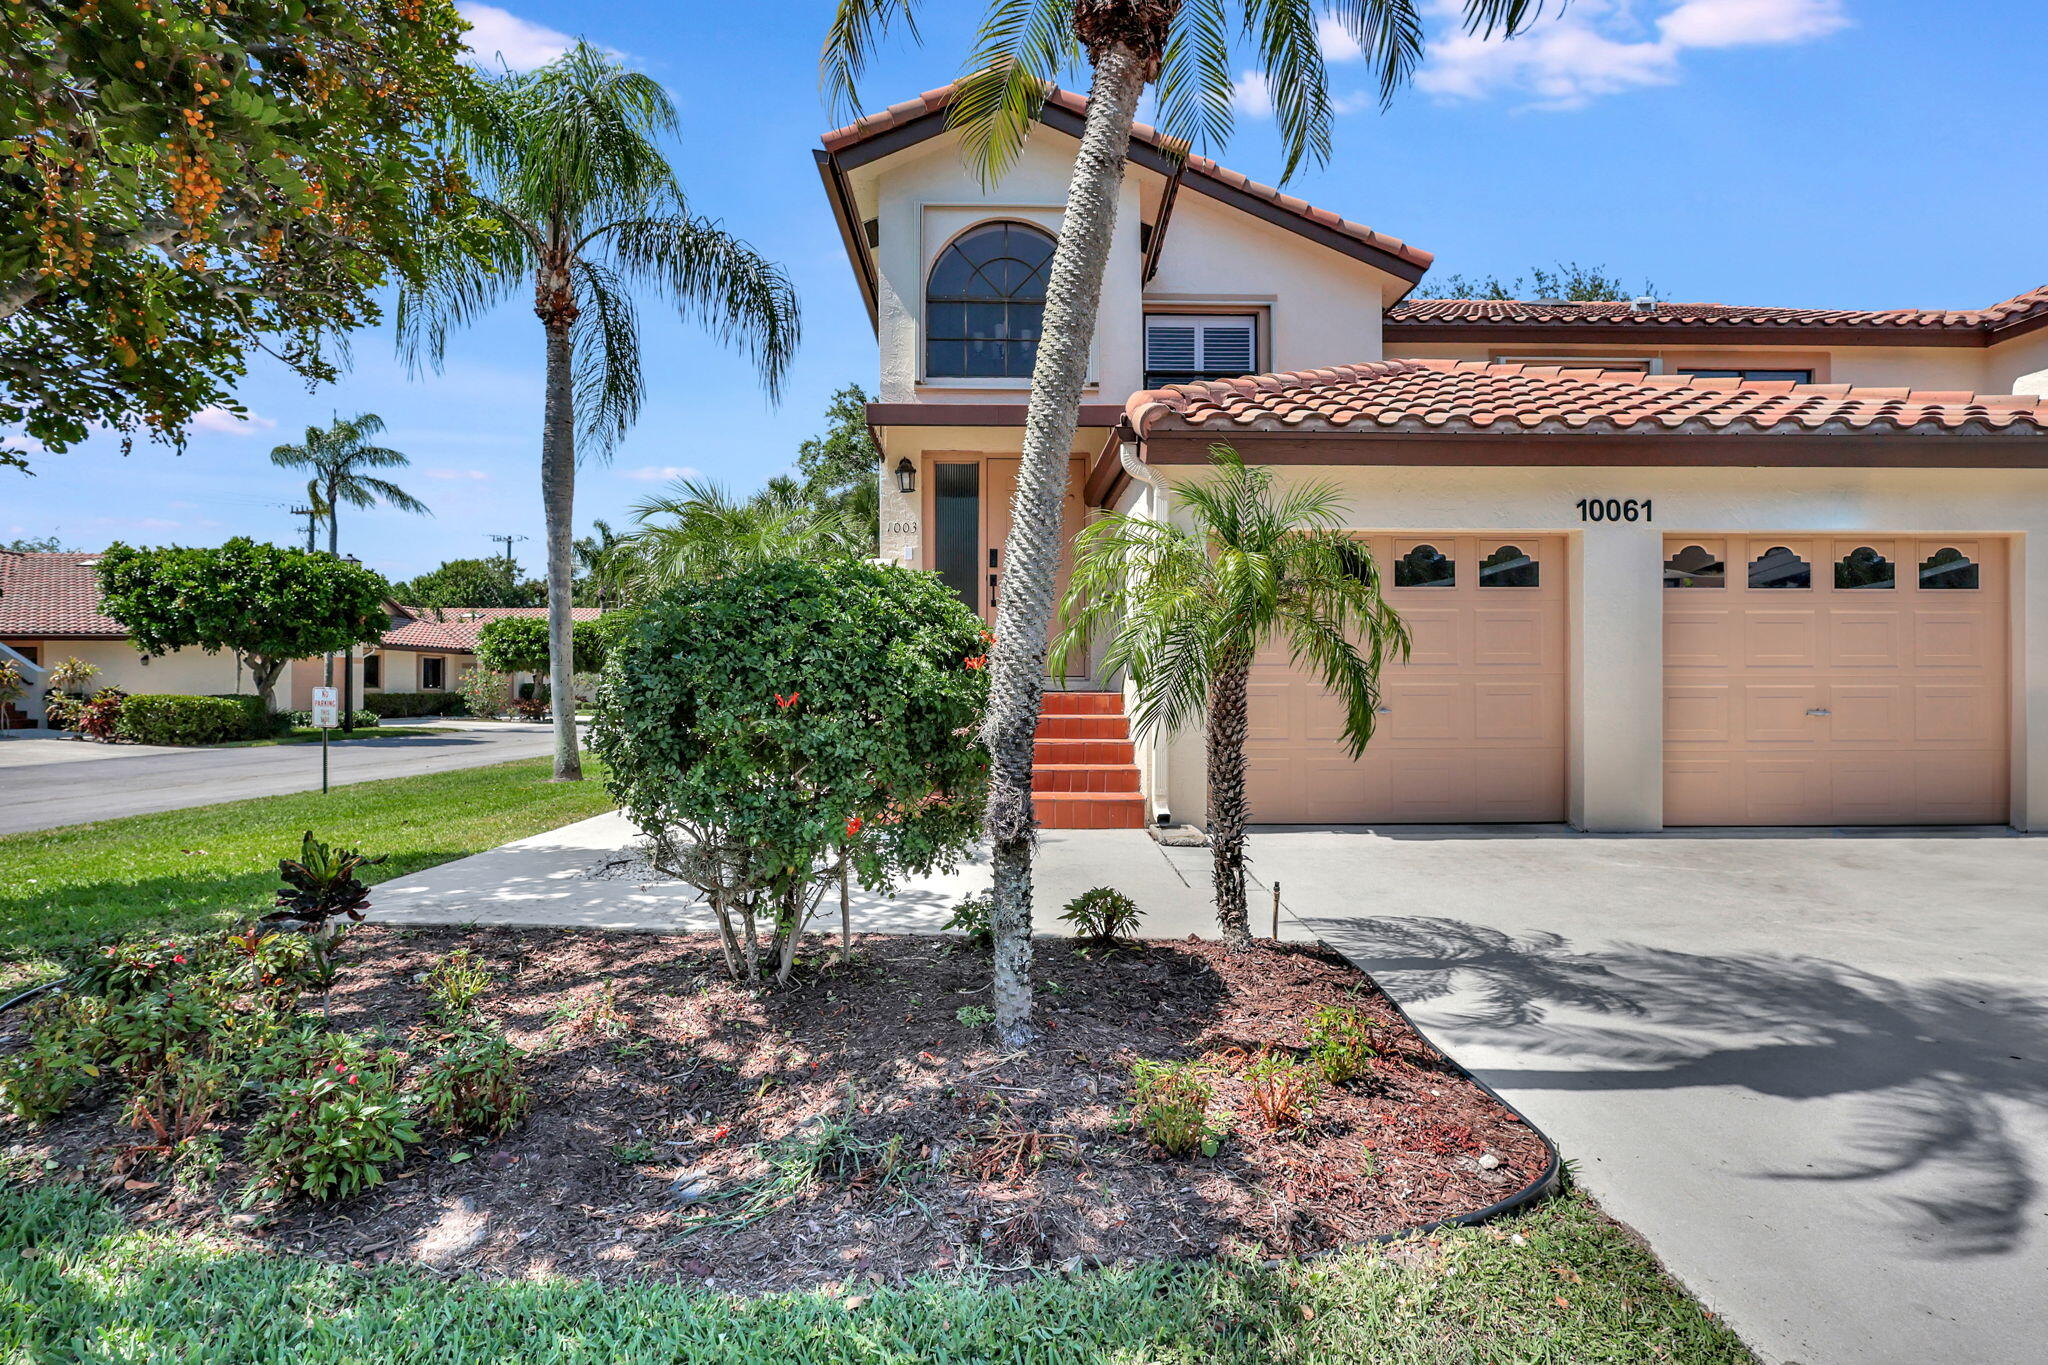 Property for Sale at 10061 53rd Way 1003, Boynton Beach, Palm Beach County, Florida - Bedrooms: 2 
Bathrooms: 2  - $385,000